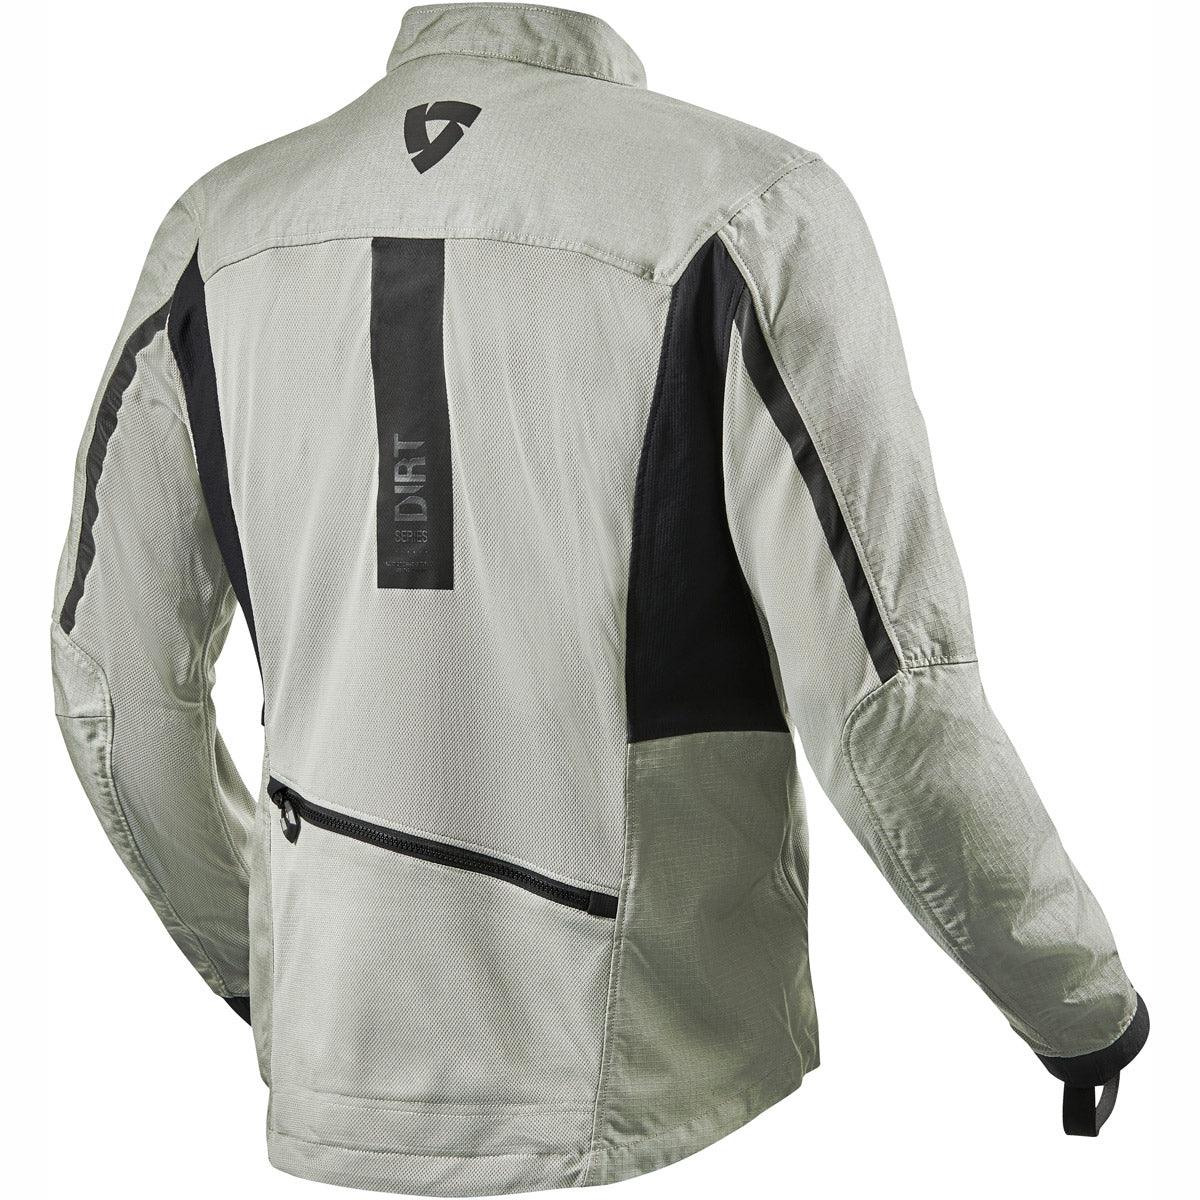 Rev It Territory Mesh Jacket Mid Grey - Motorcycle Clothing